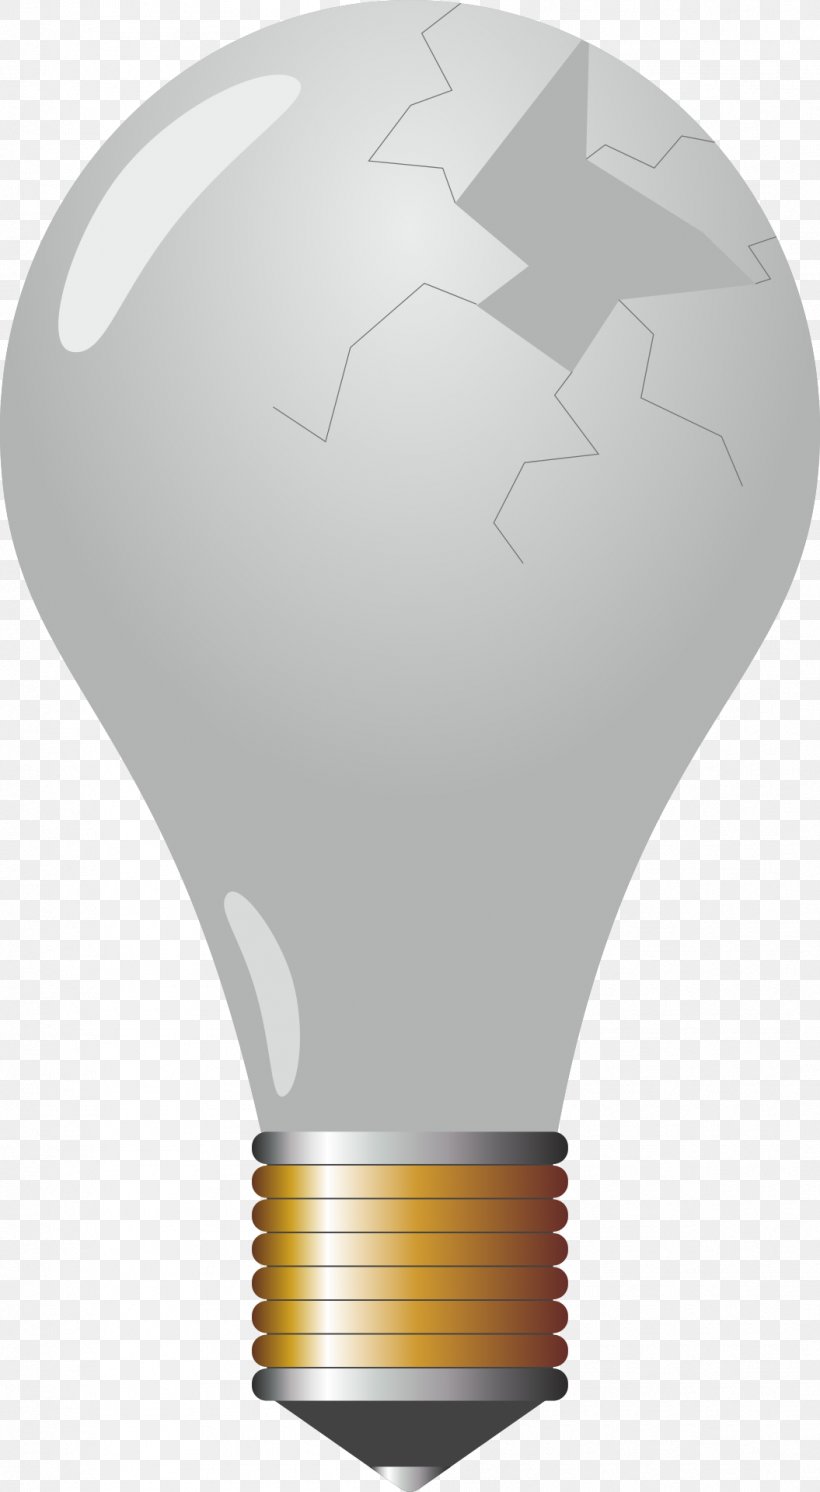 Incandescent Light Bulb Fluorescent Lamp LED Lamp Lighting, PNG, 1055x1920px, Light, Compact Fluorescent Lamp, Electric Light, Emergency Lighting, Fluorescent Lamp Download Free